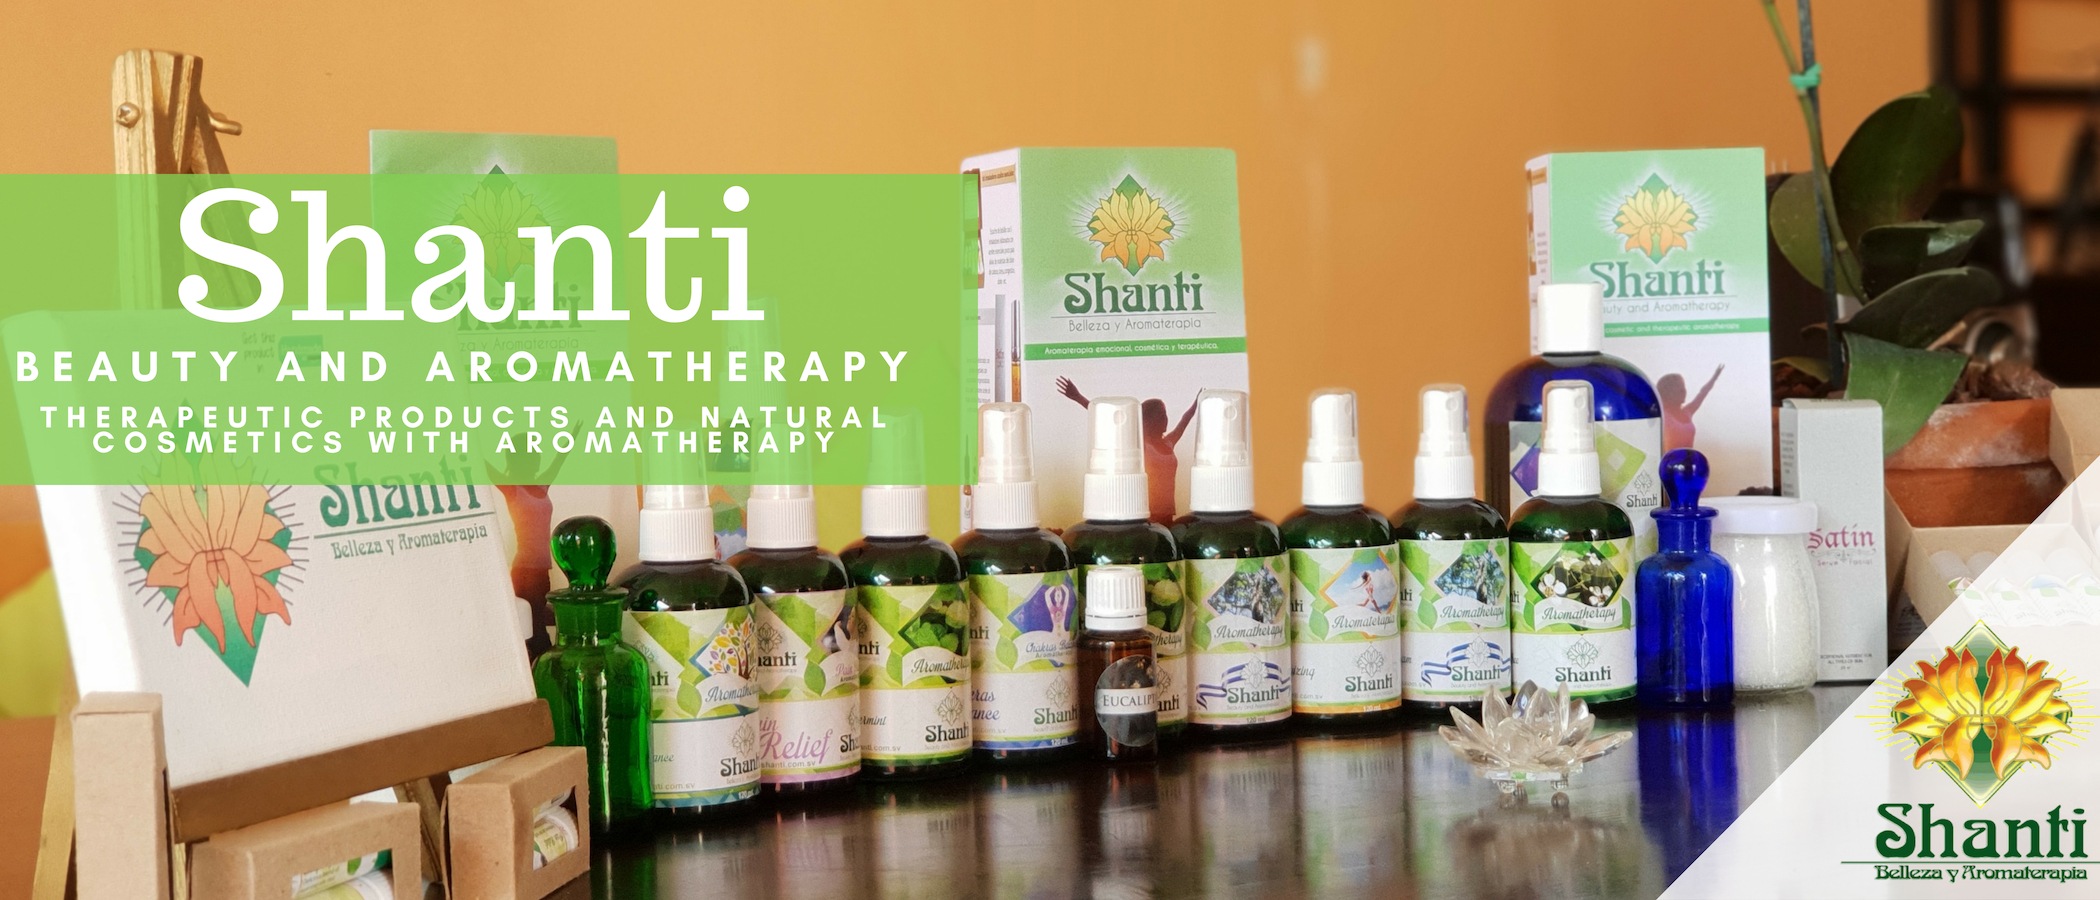 Shanti. Therapeutic Blends Body Oils